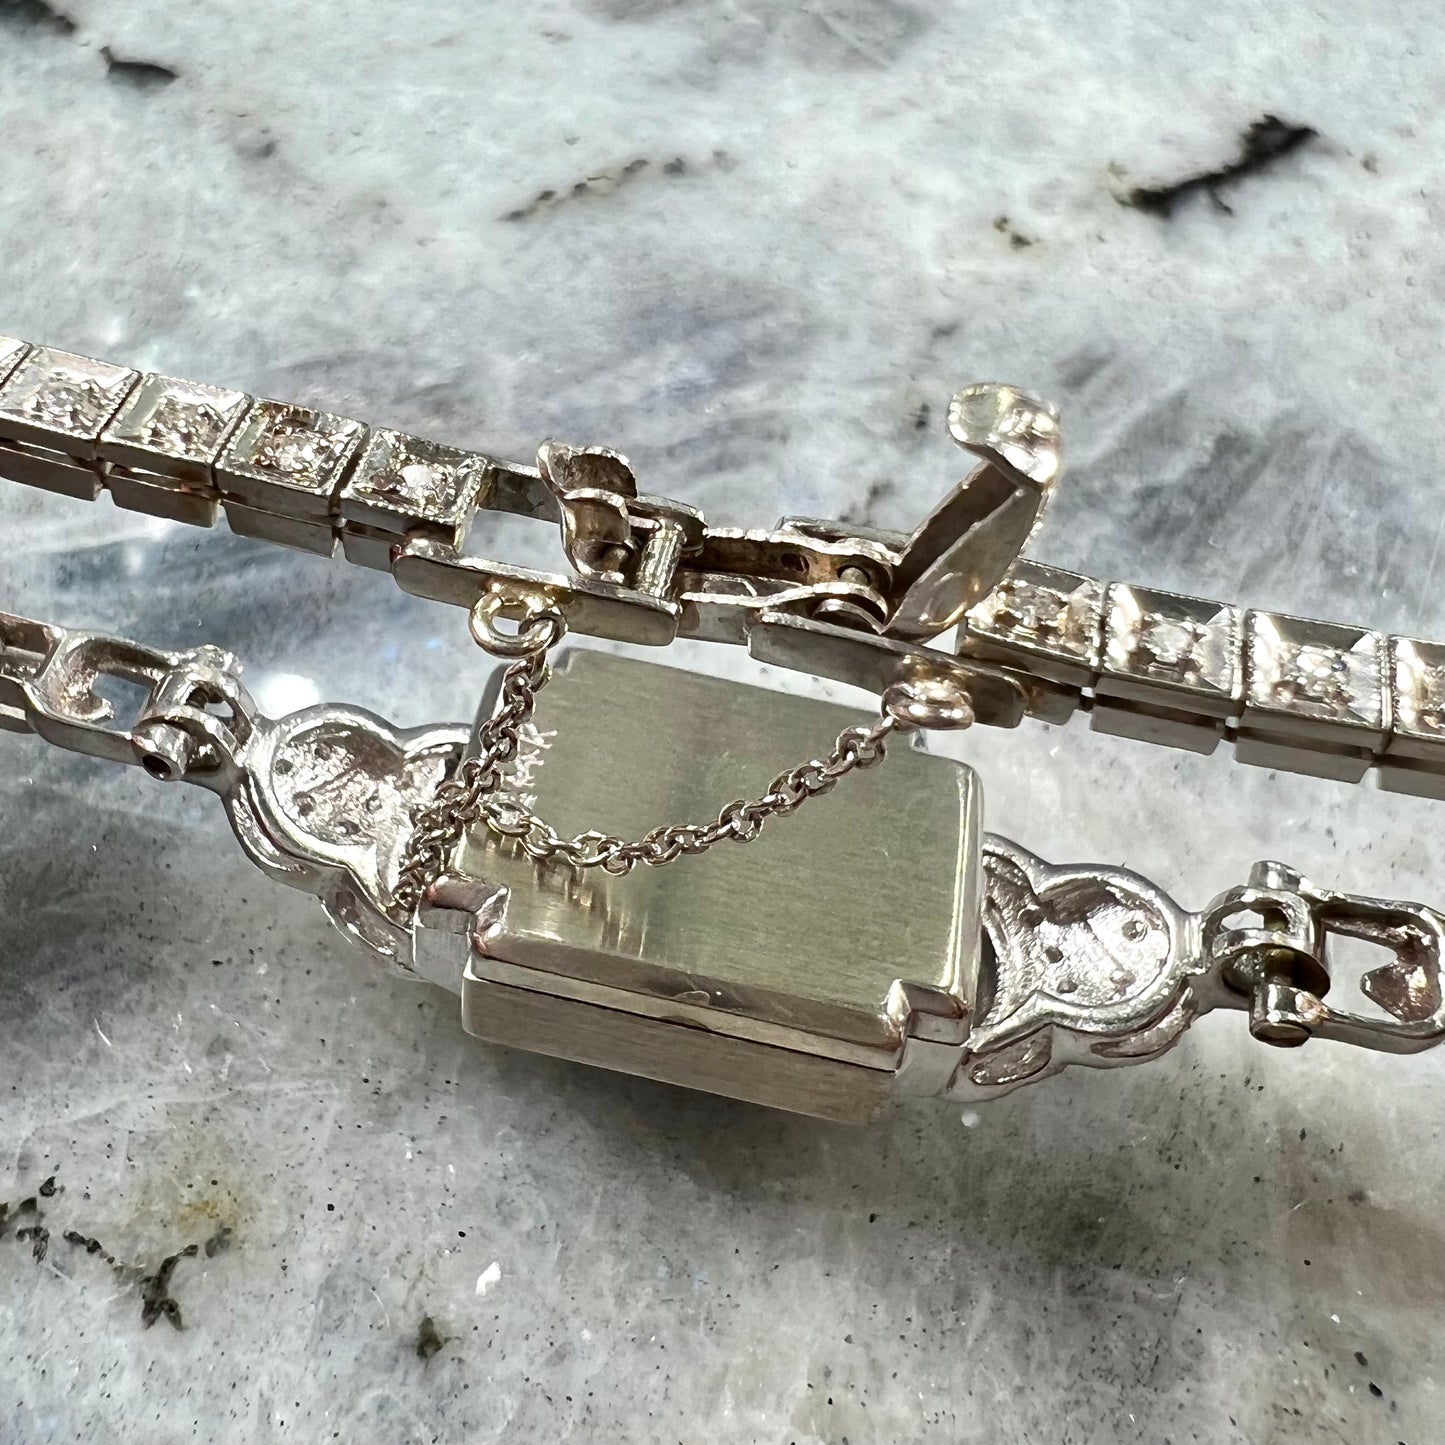 A vintage, art deco style white gold and diamond bracelet set with a rectangular shape black boulder opal stone.